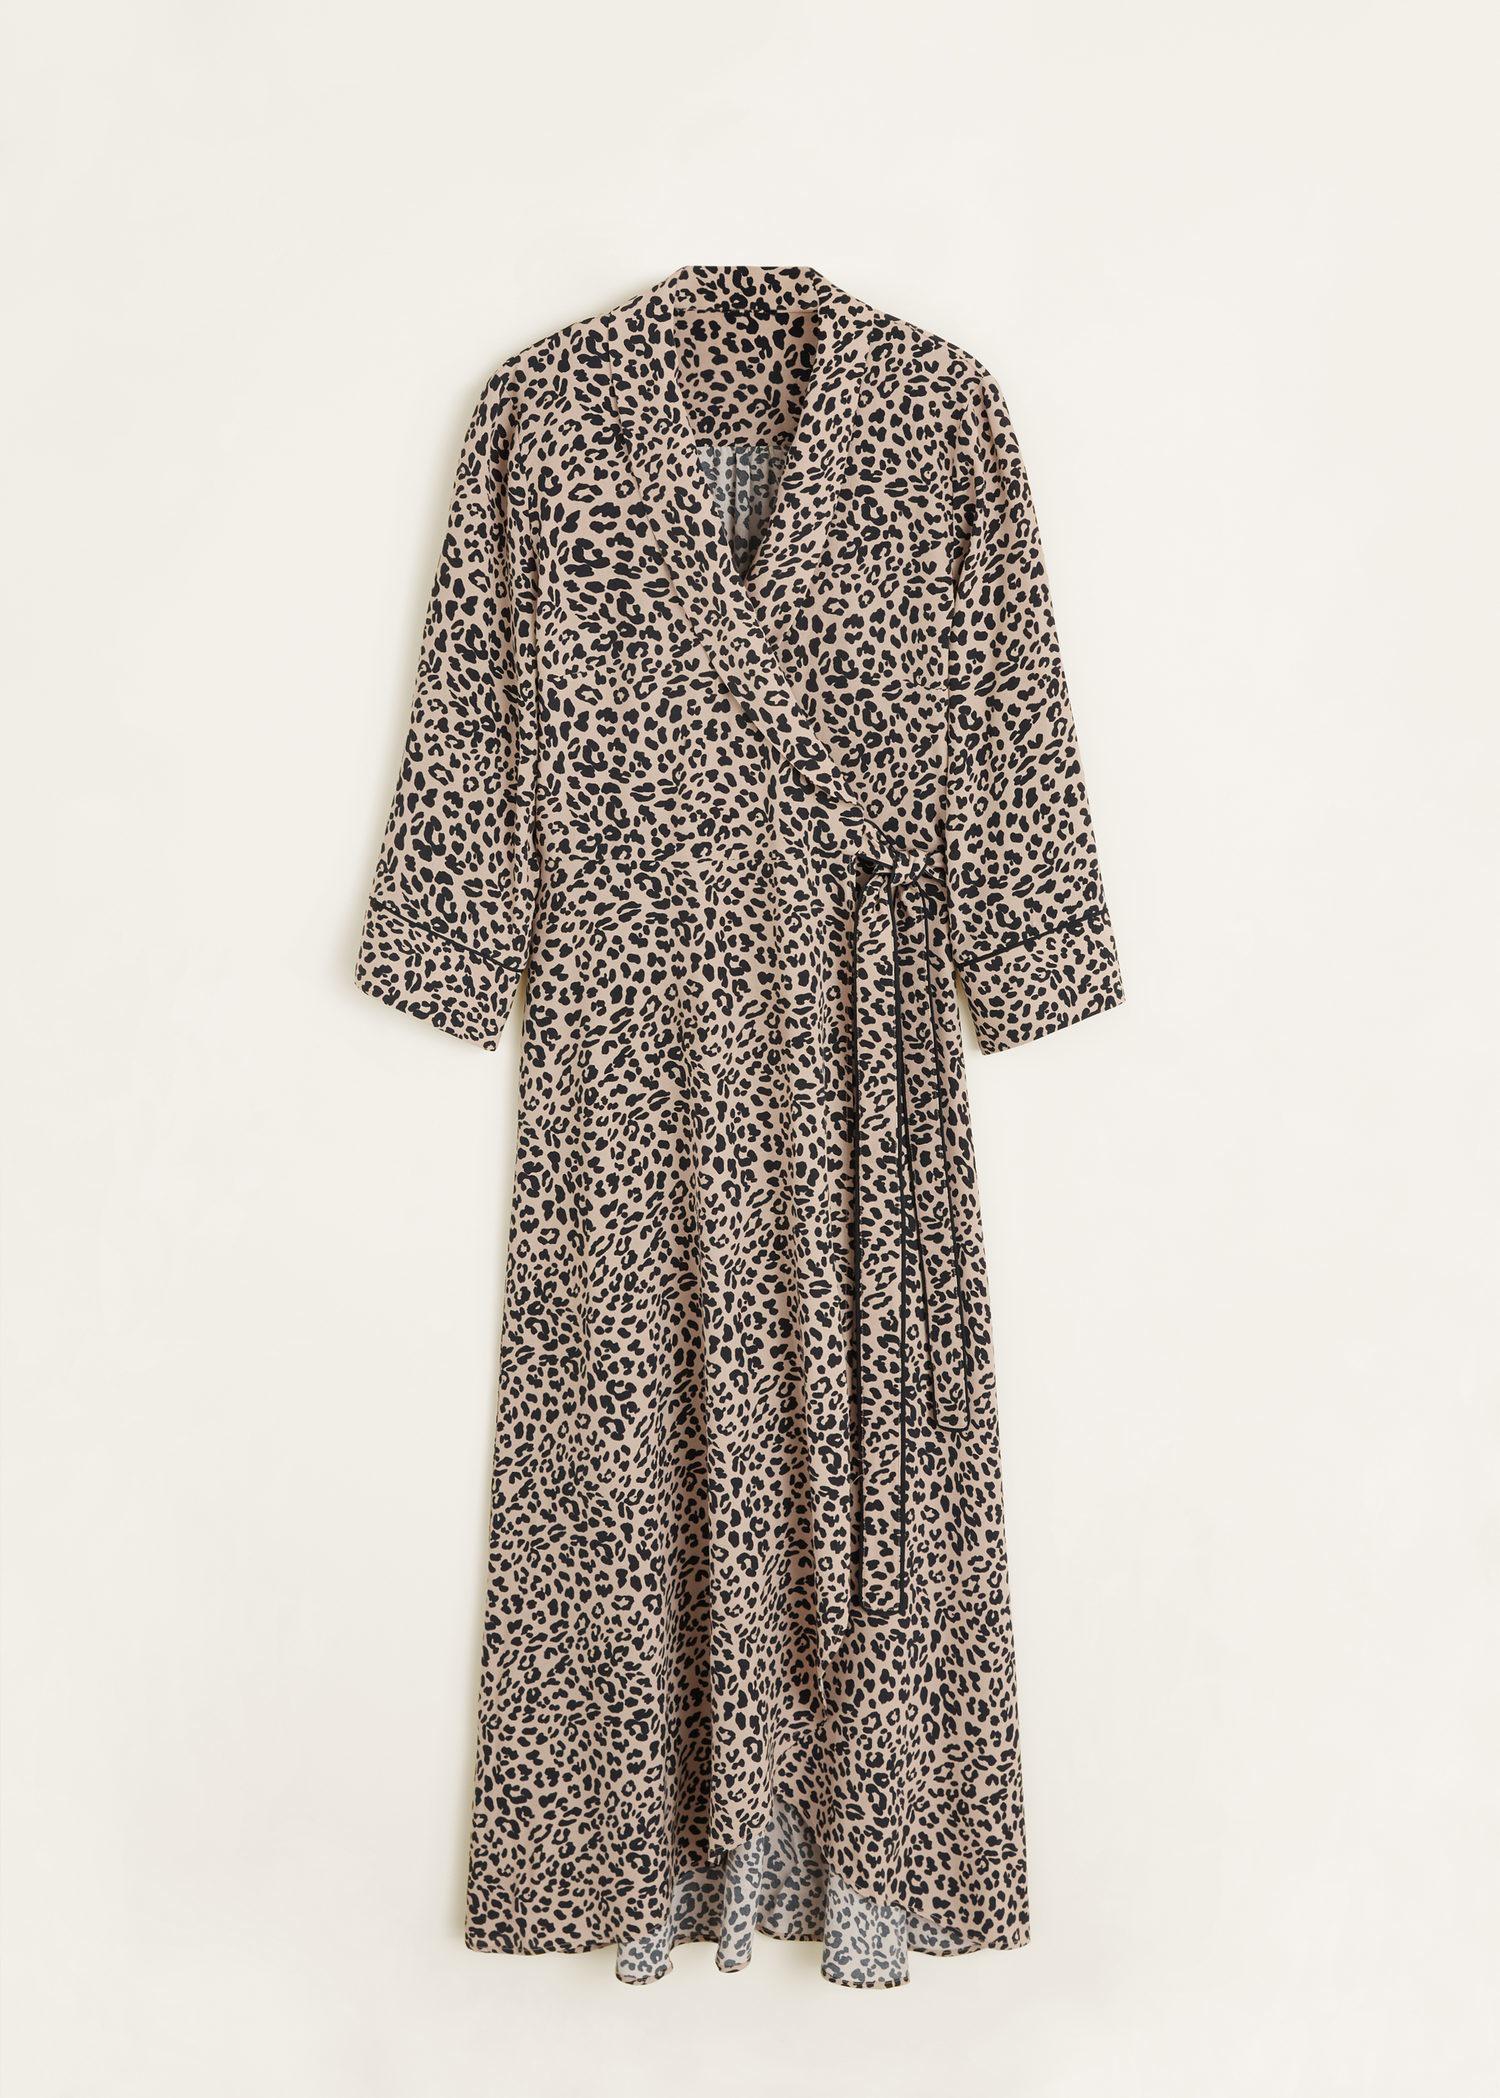 Mango Leopard Print Dress in Black - Lyst